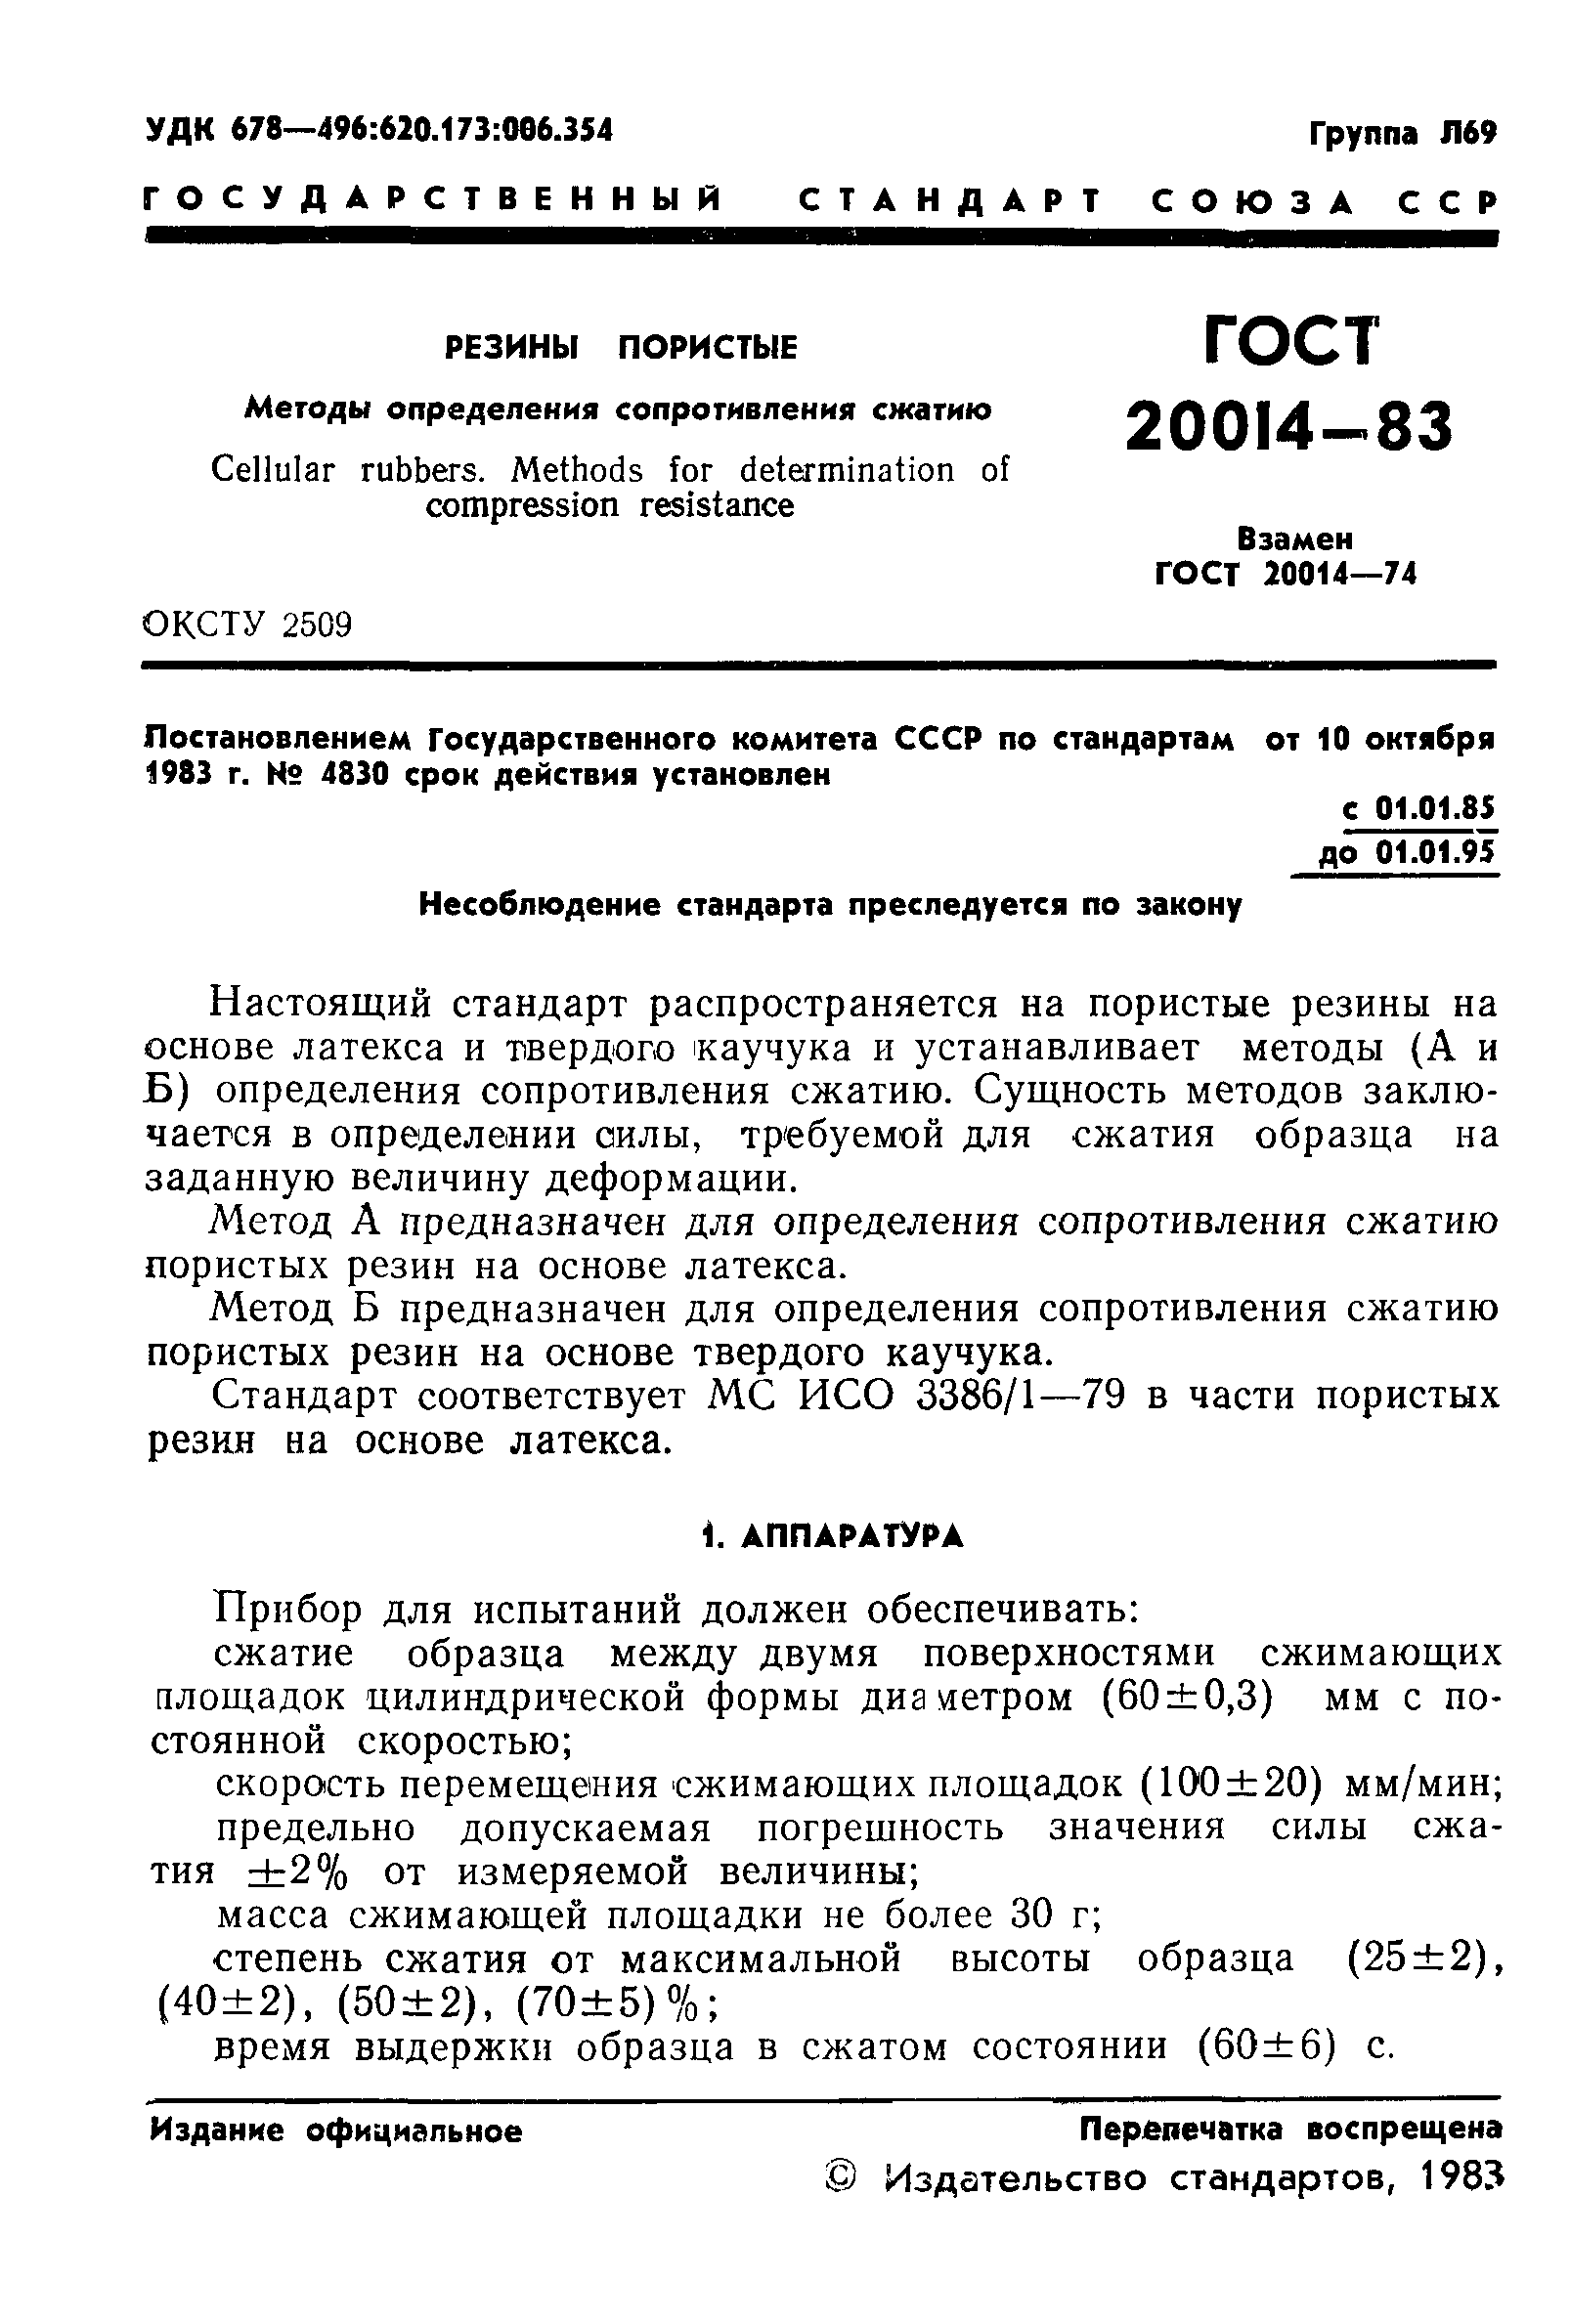 ГОСТ 20014-83